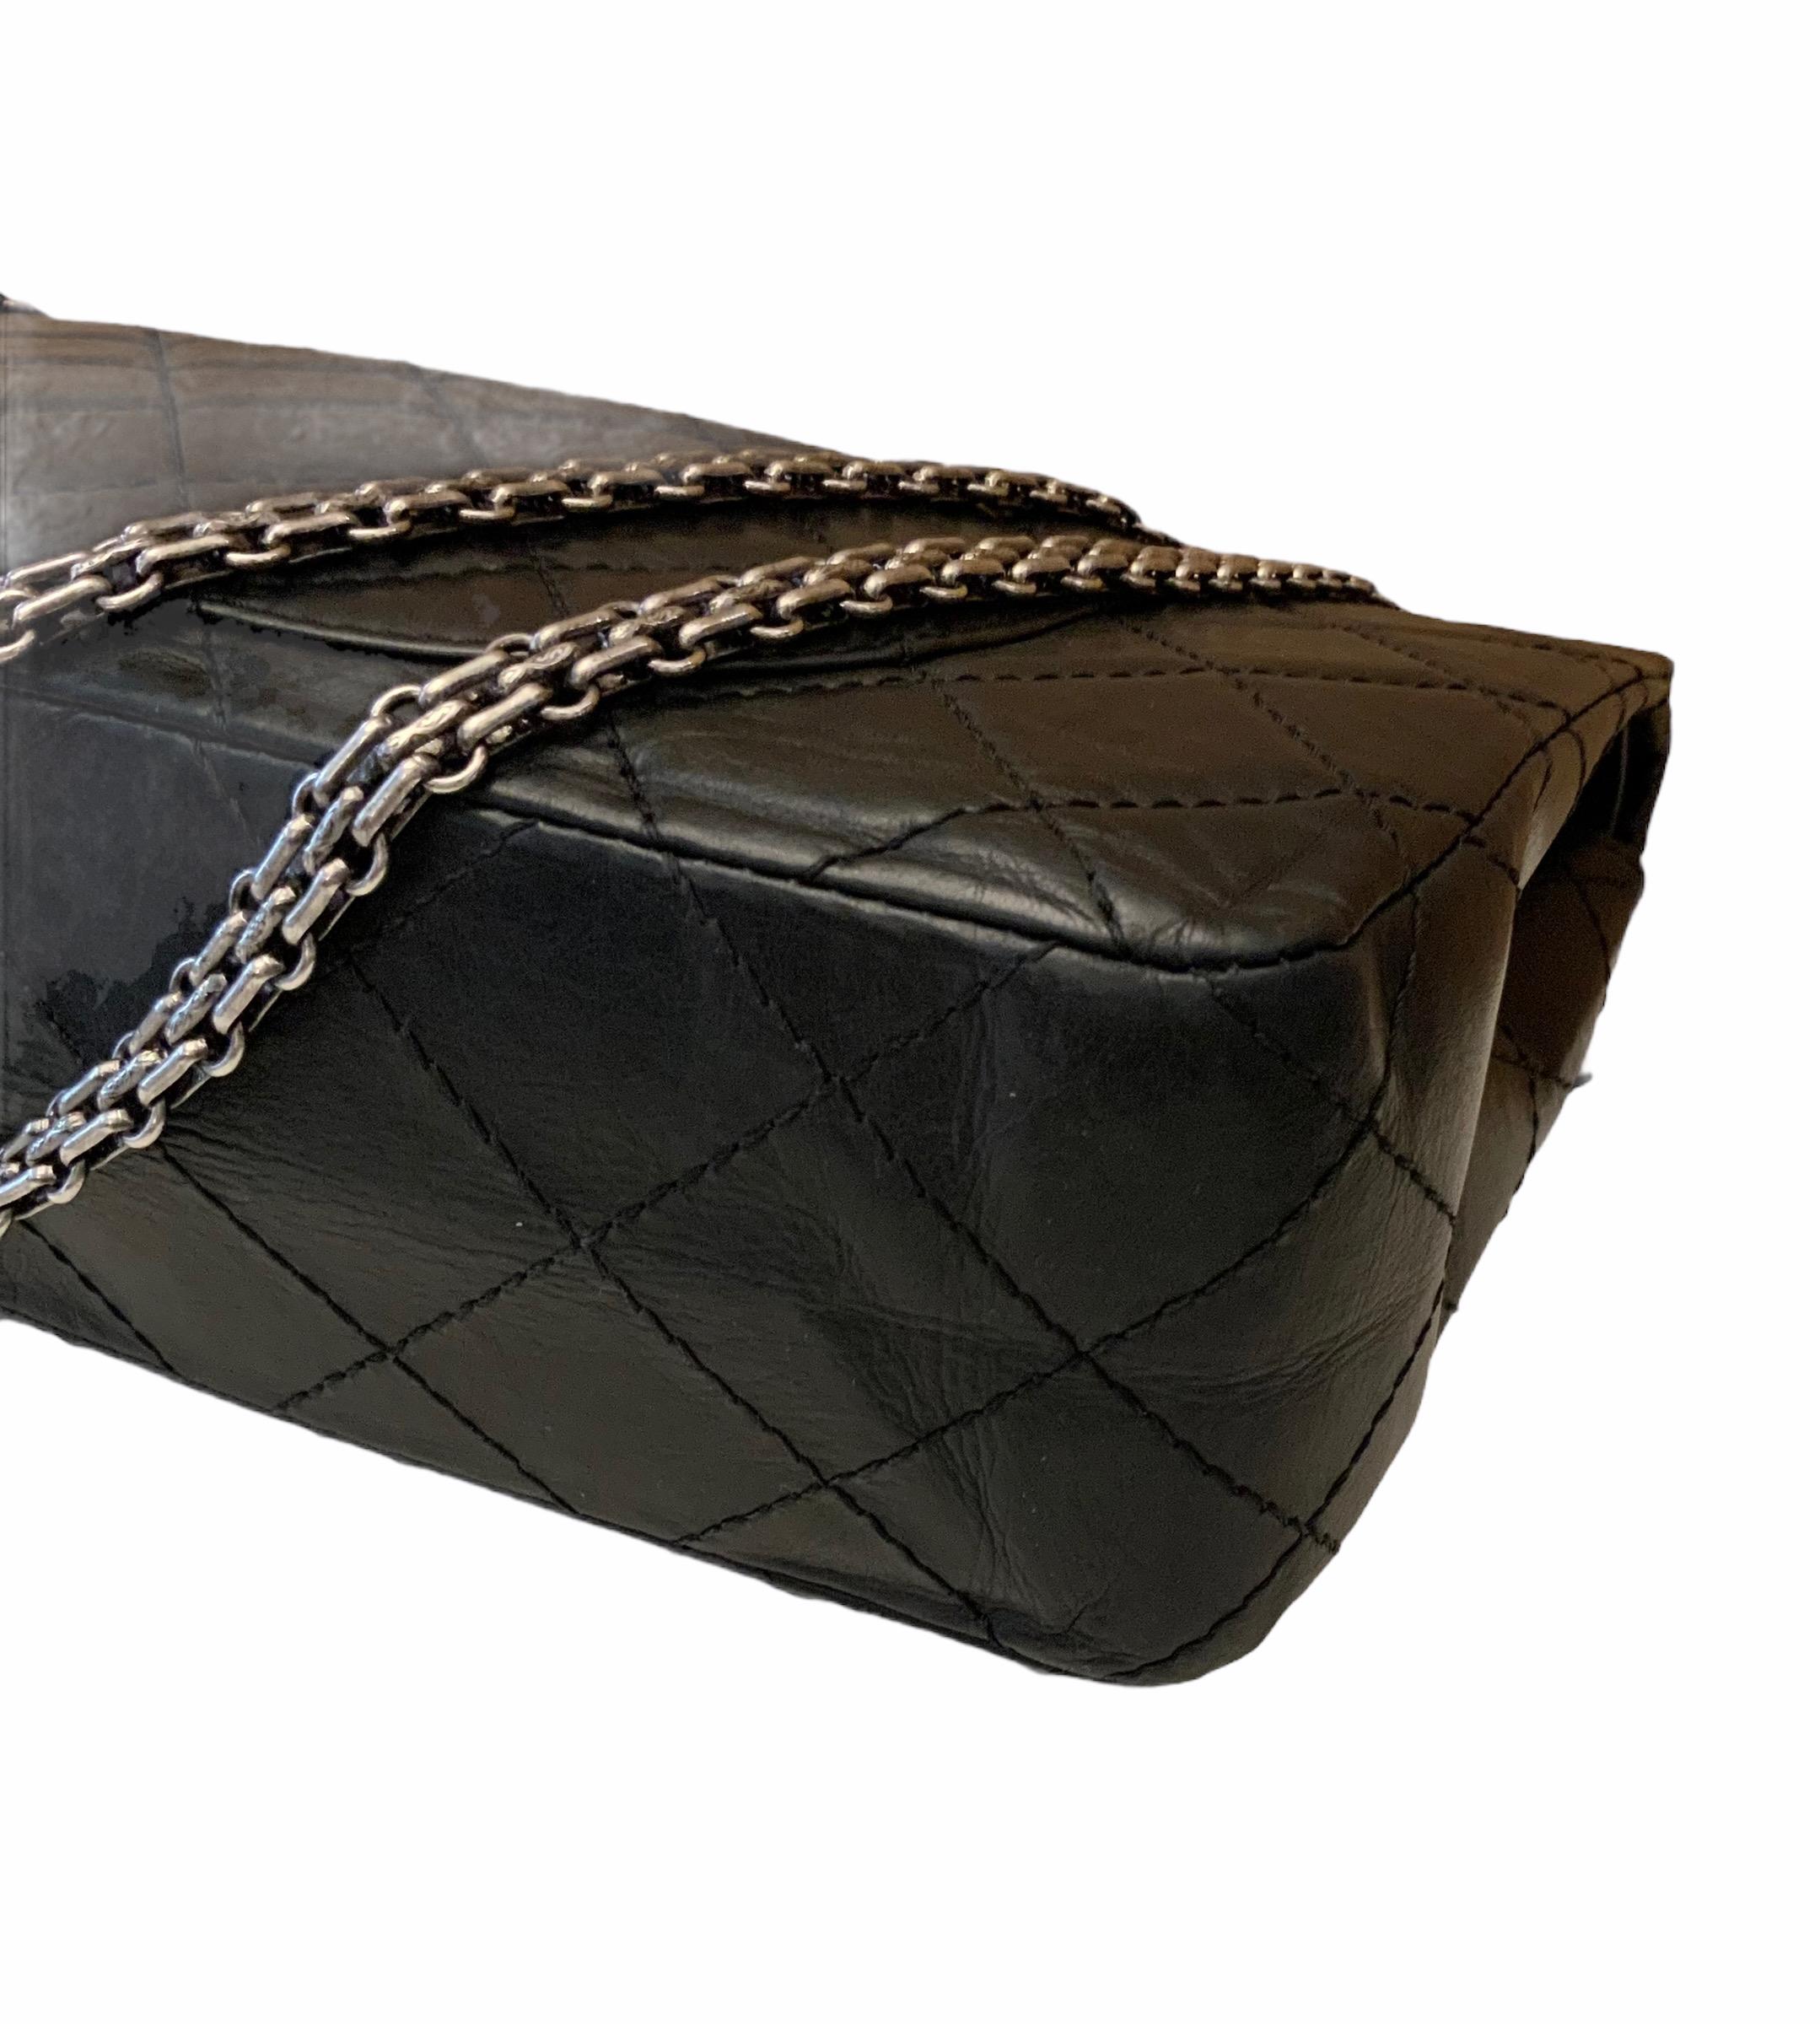 Chanel 2.55 Reissue Black Leather 227 Bag 6